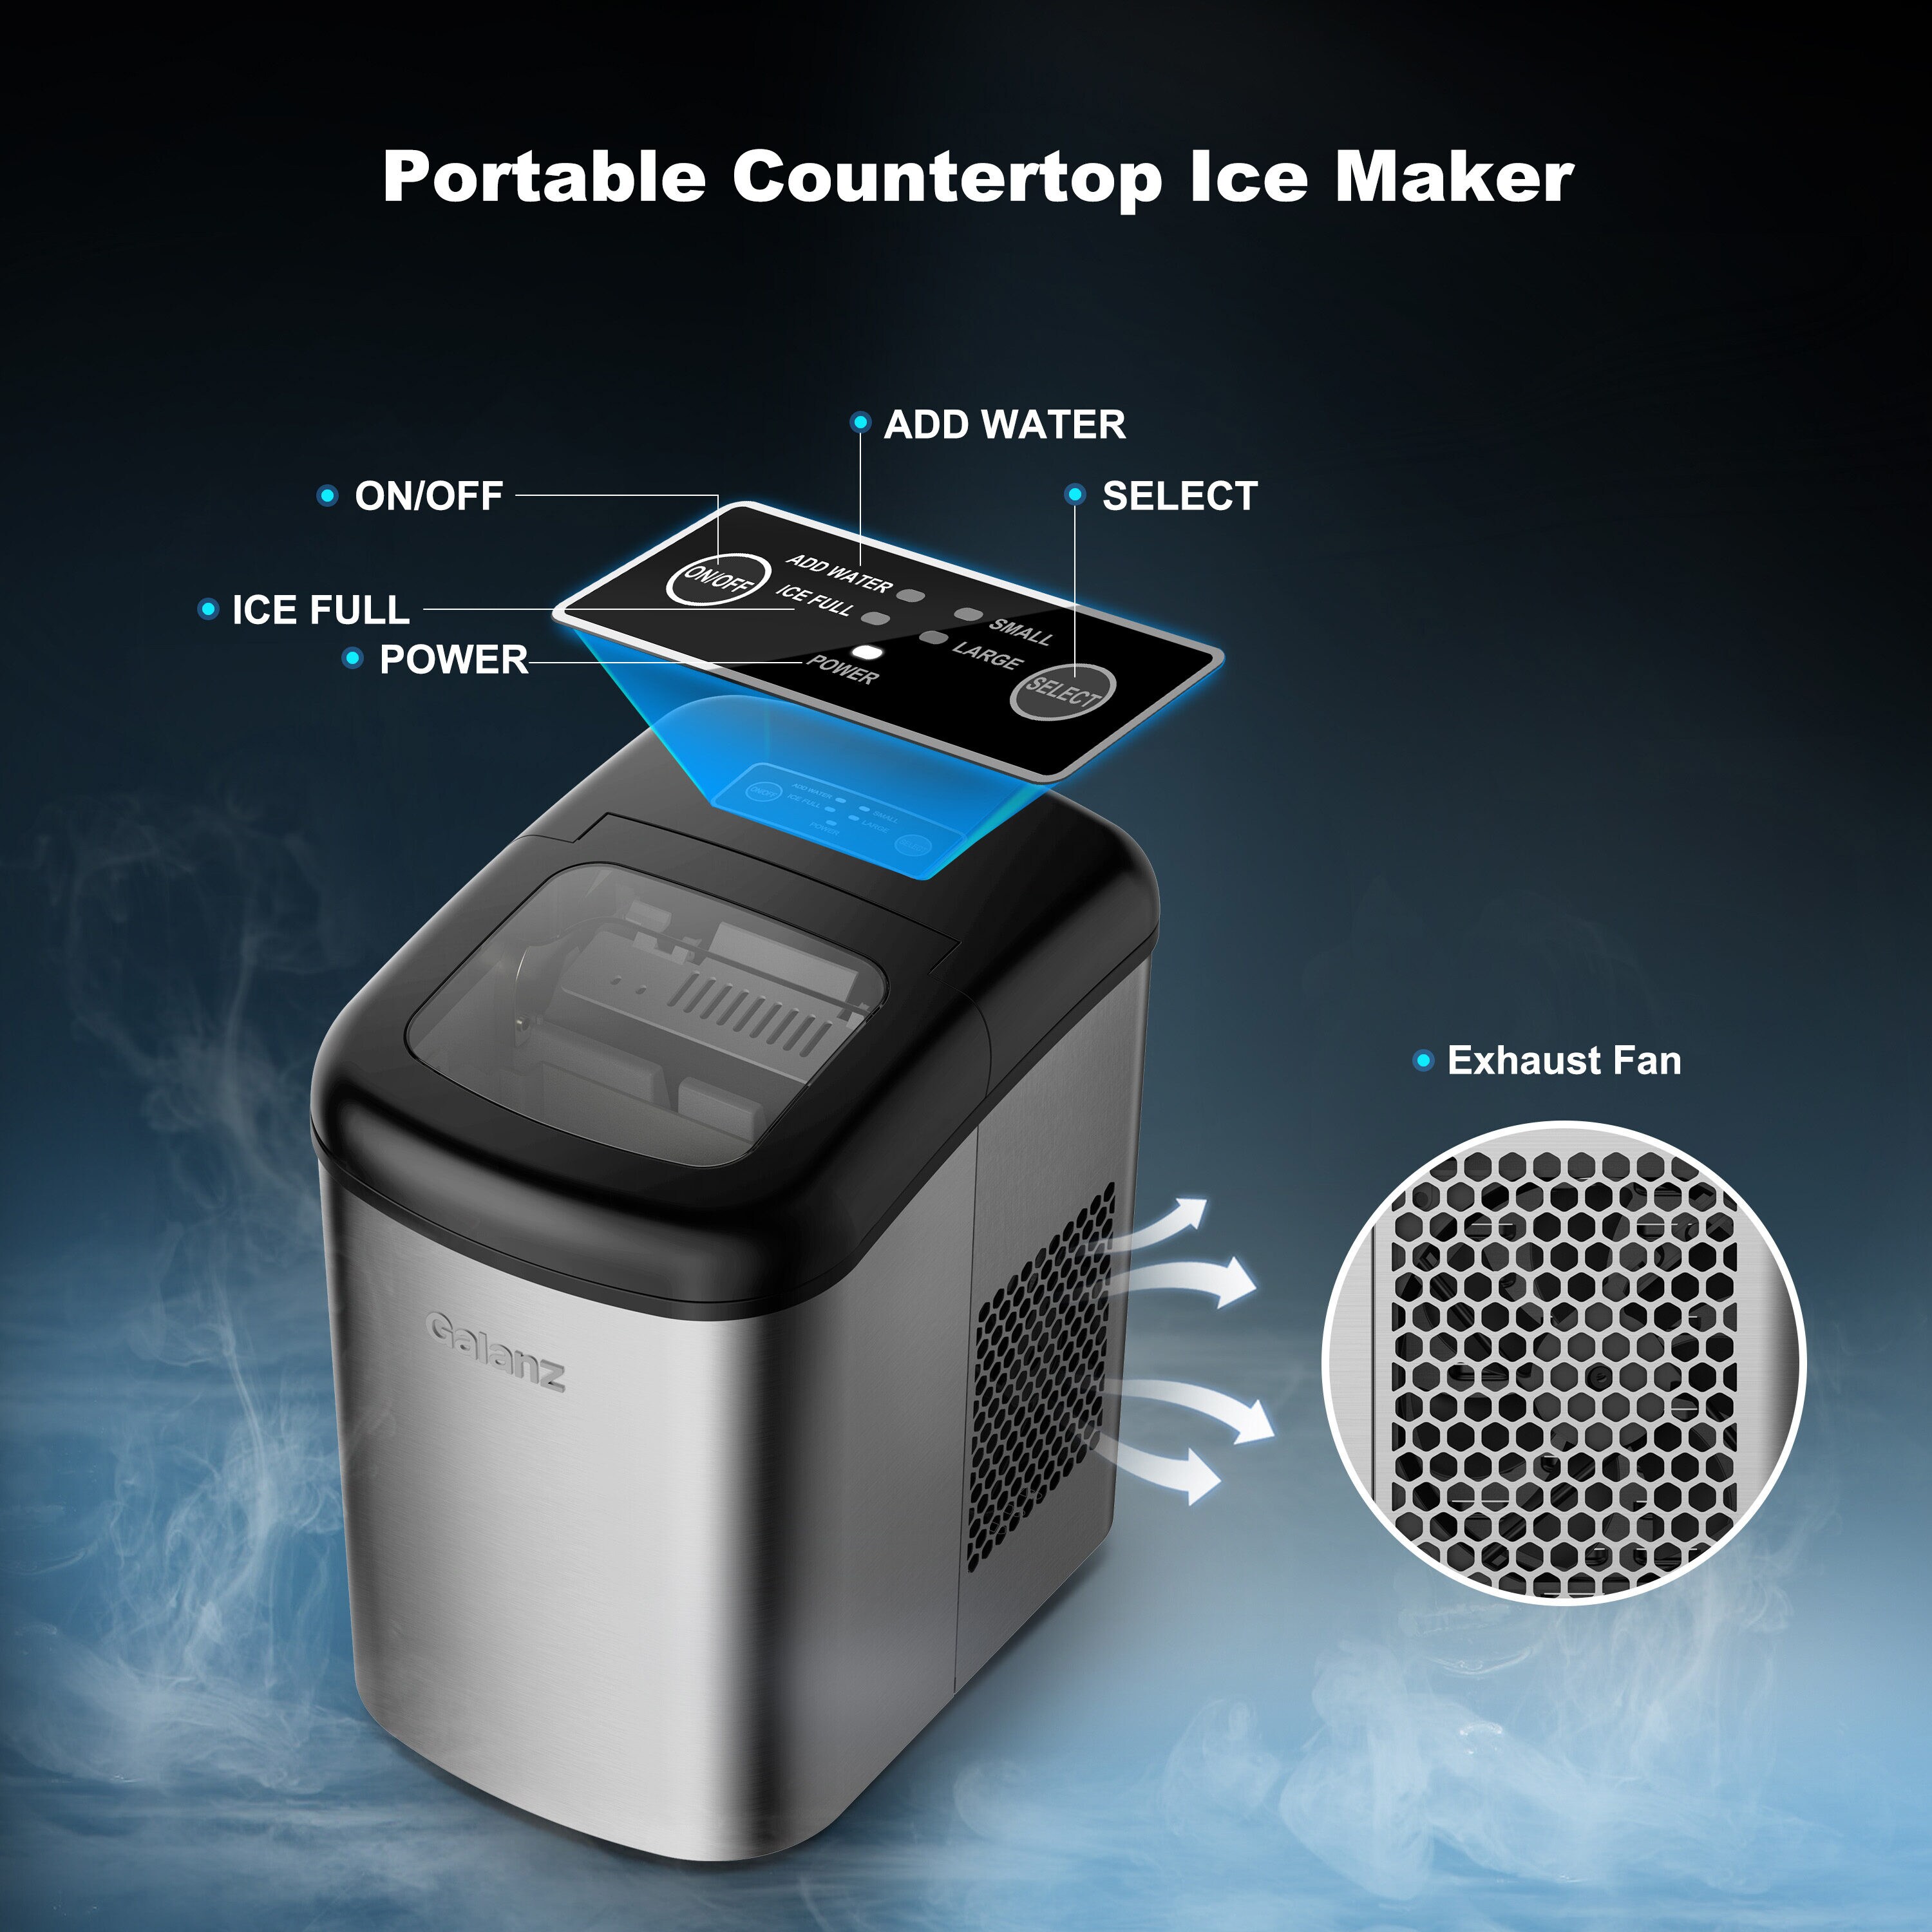 Black+decker 26 lb. Capacity Portable Ice Maker in Stainless Steel